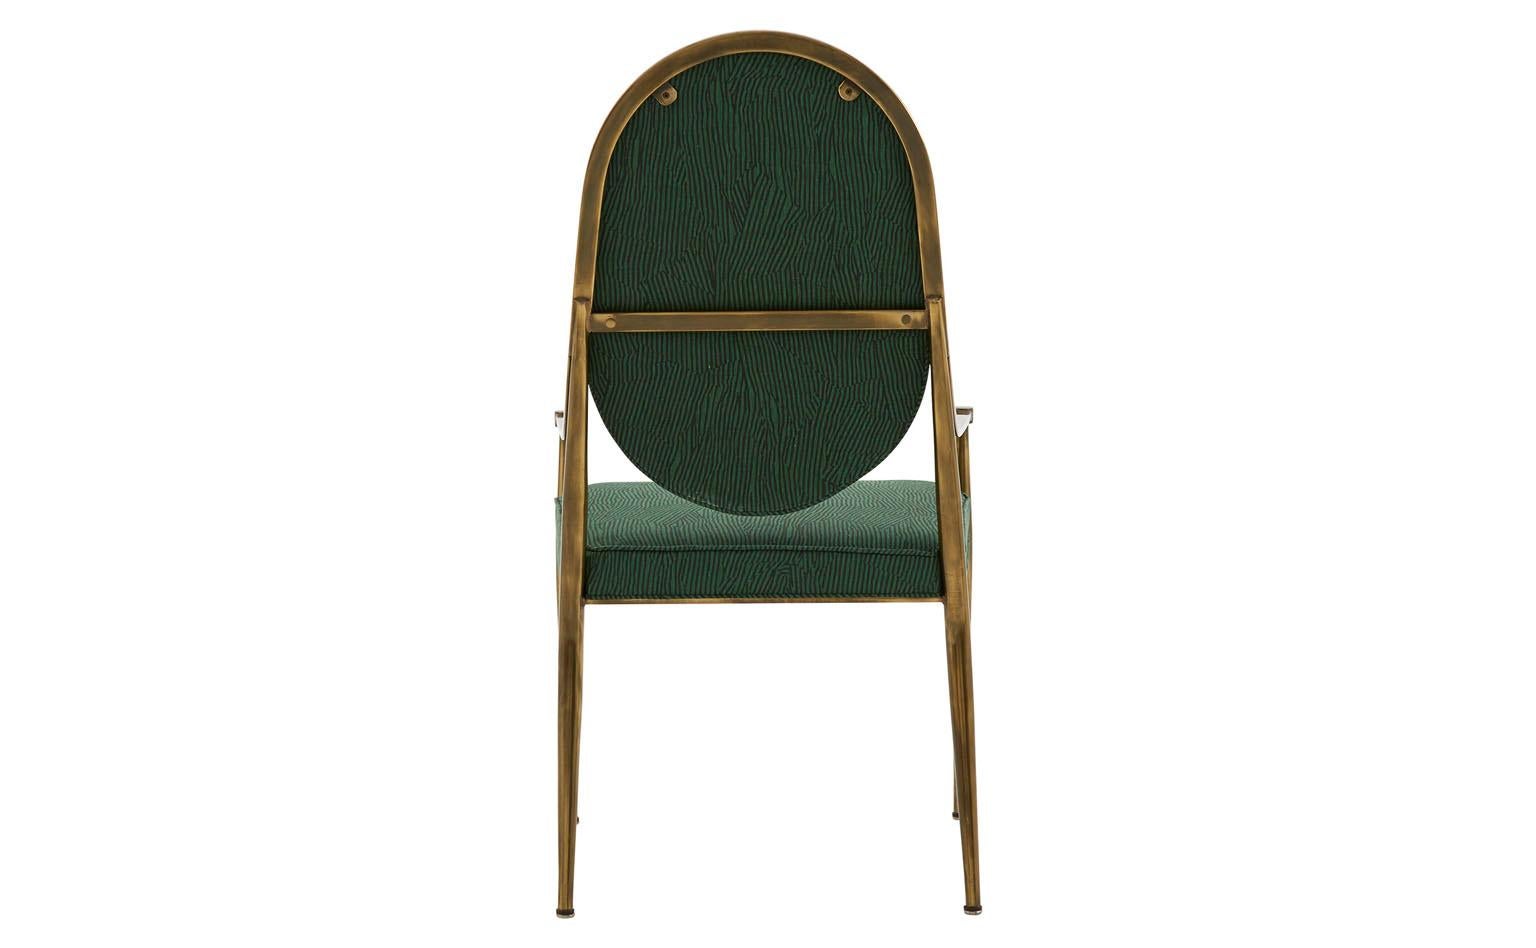 American Mastercraft Brass Dining Chair in Kelly Wearstler Avant Green Linen